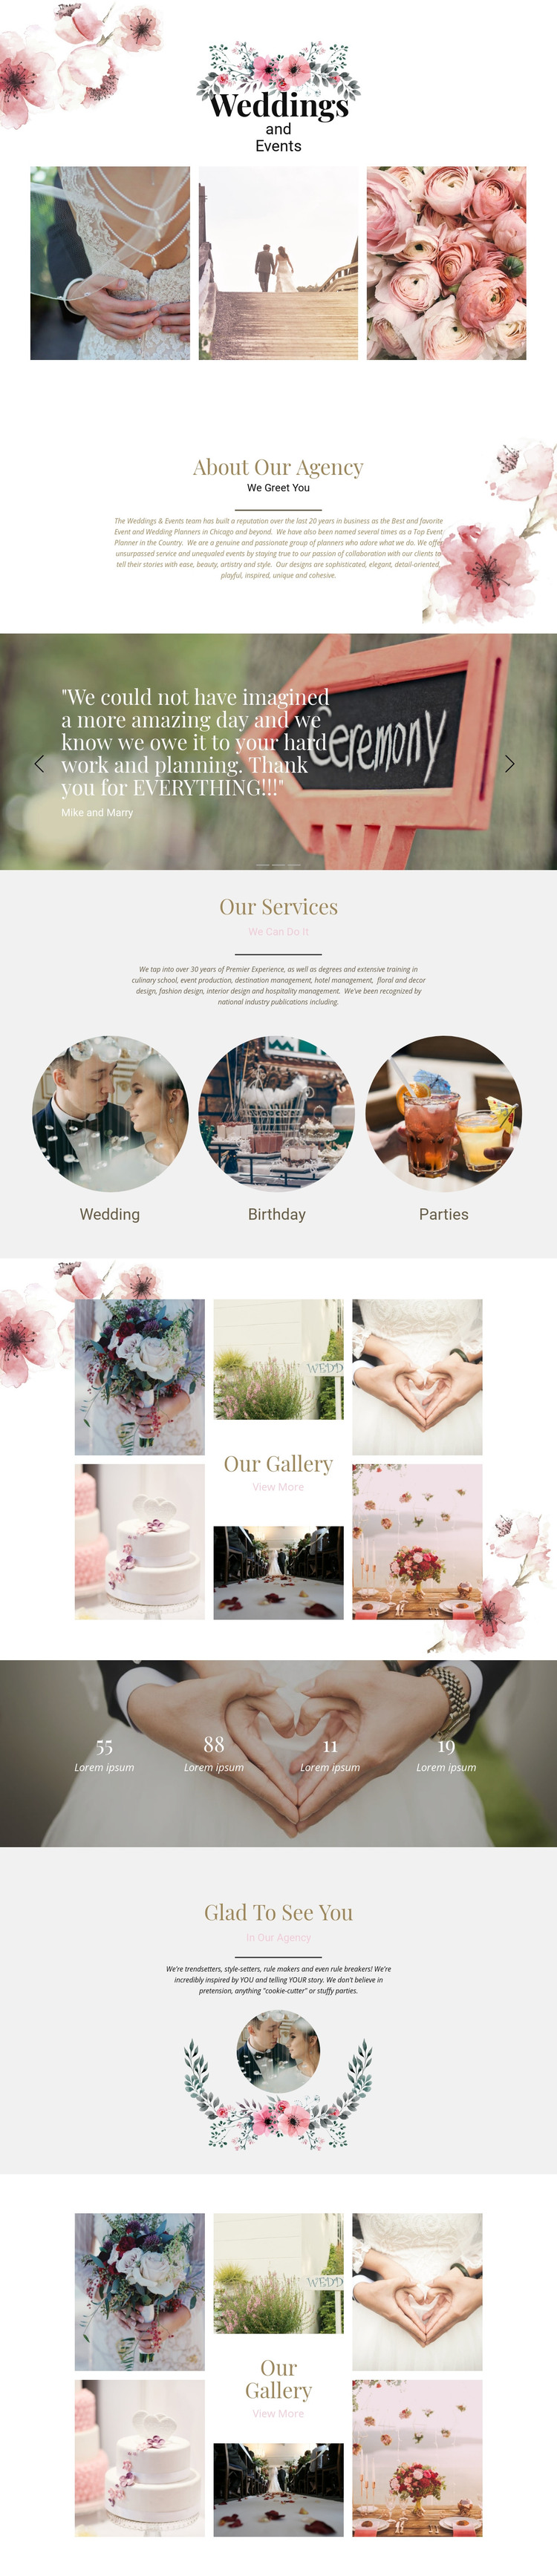 Moments of wedding Homepage Design